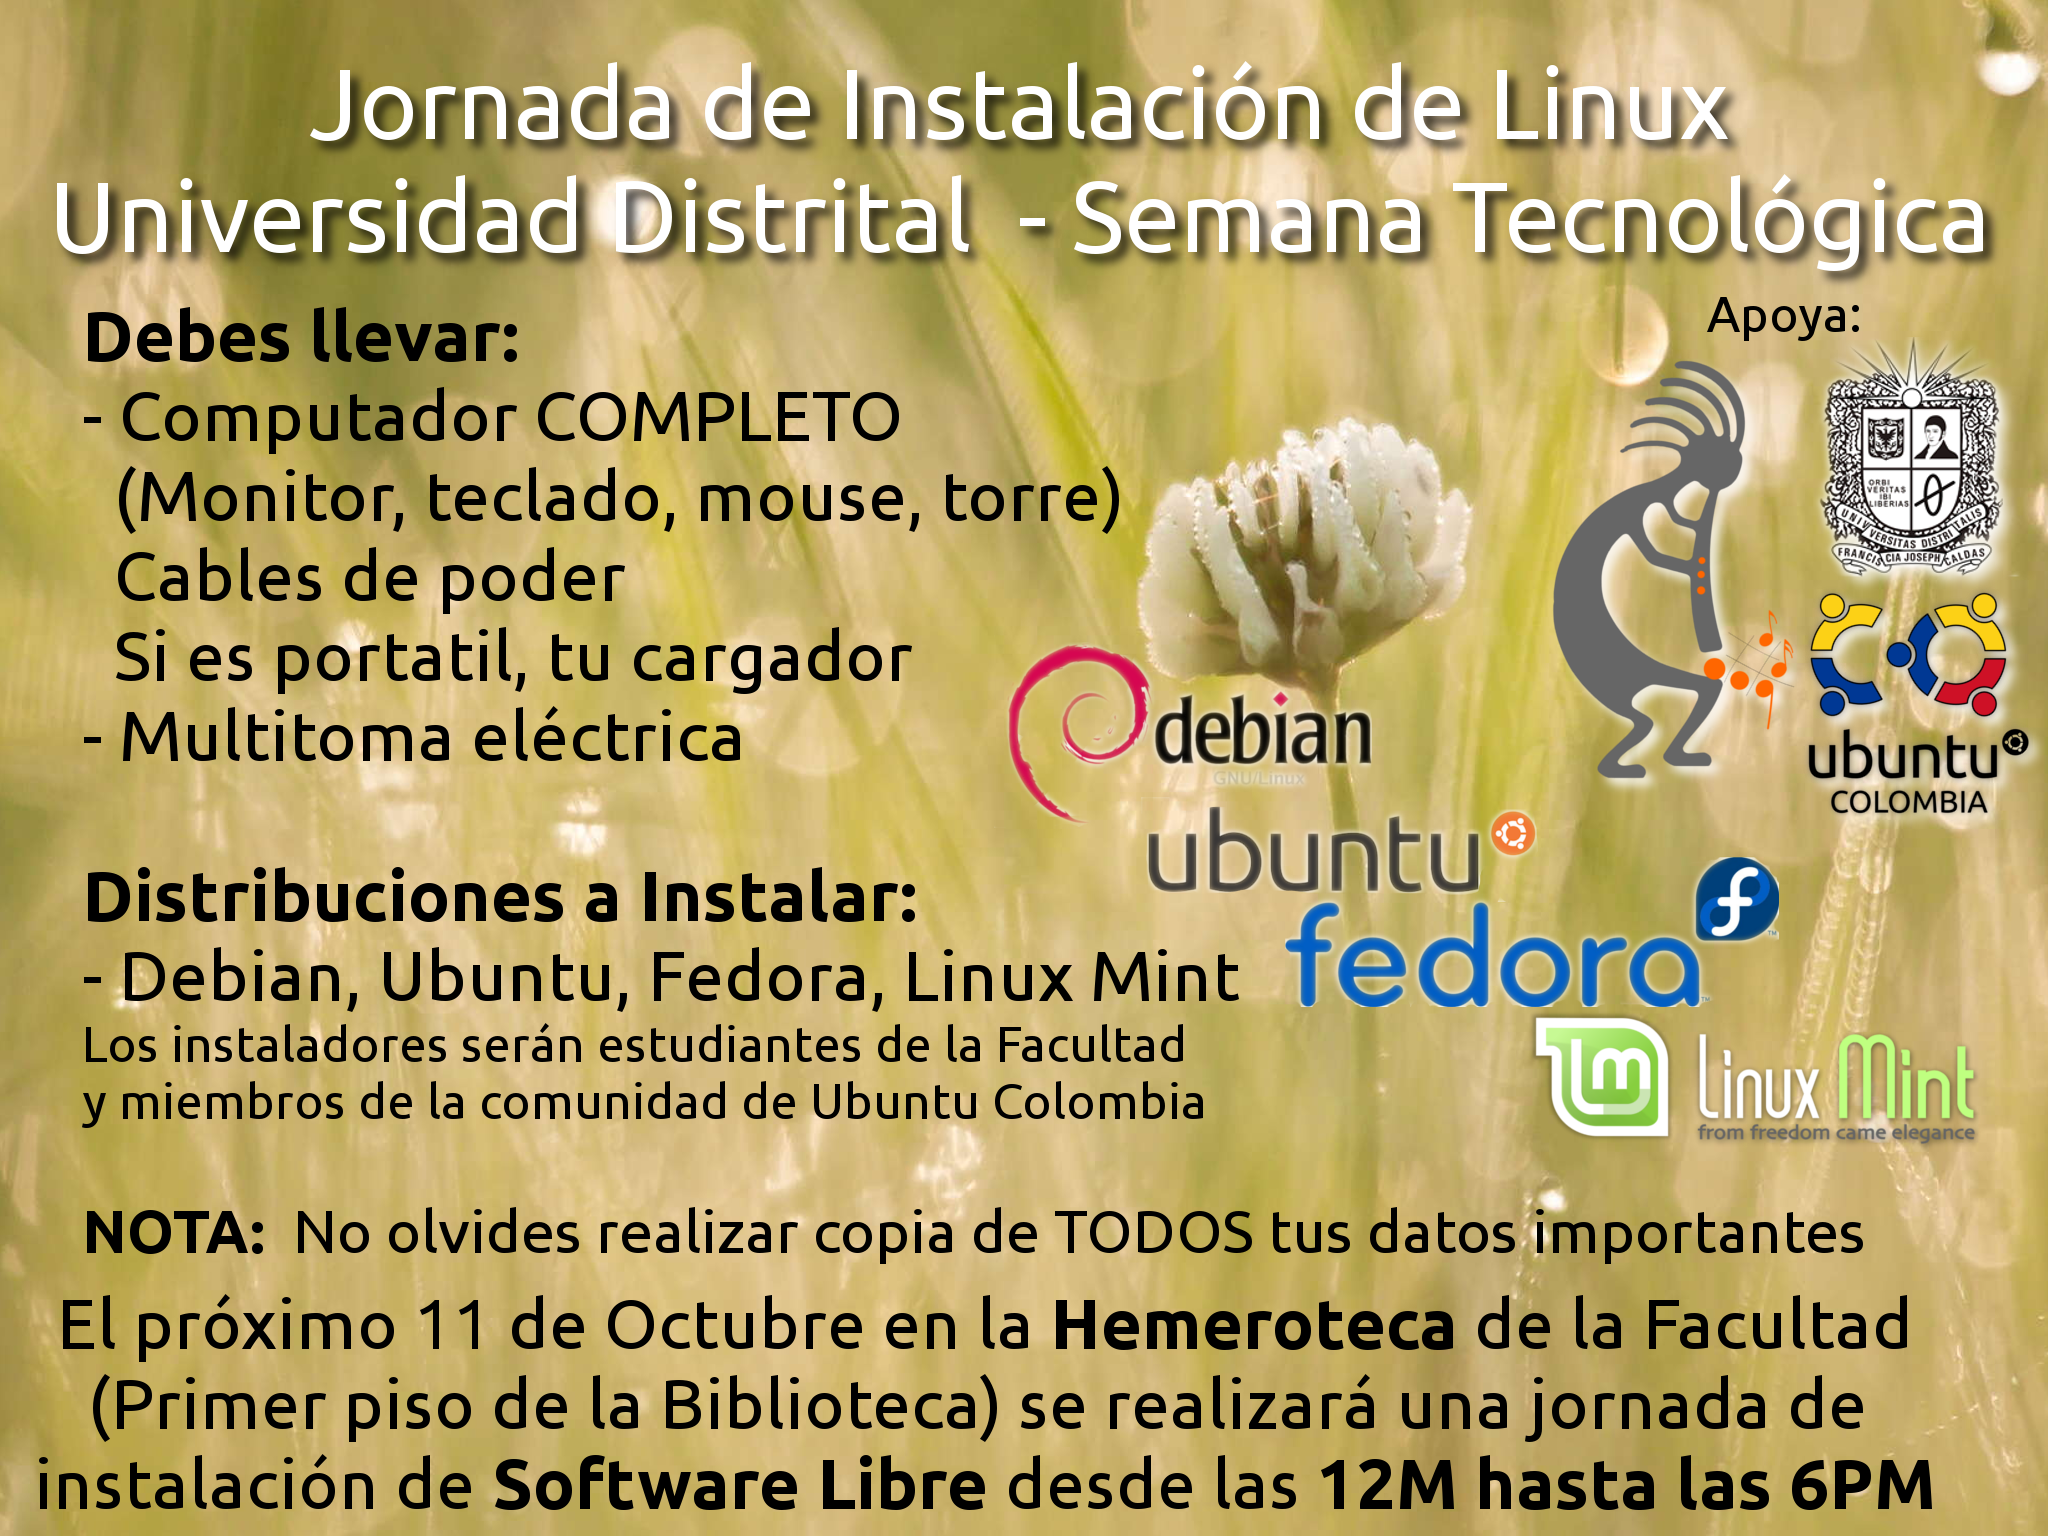 https://wiki.ubuntu.com/ColombianTeam/Eventos/semanatecnologicaudistrital2012?action=AttachFile&do=get&target=Jornada+de+Instalación+.png